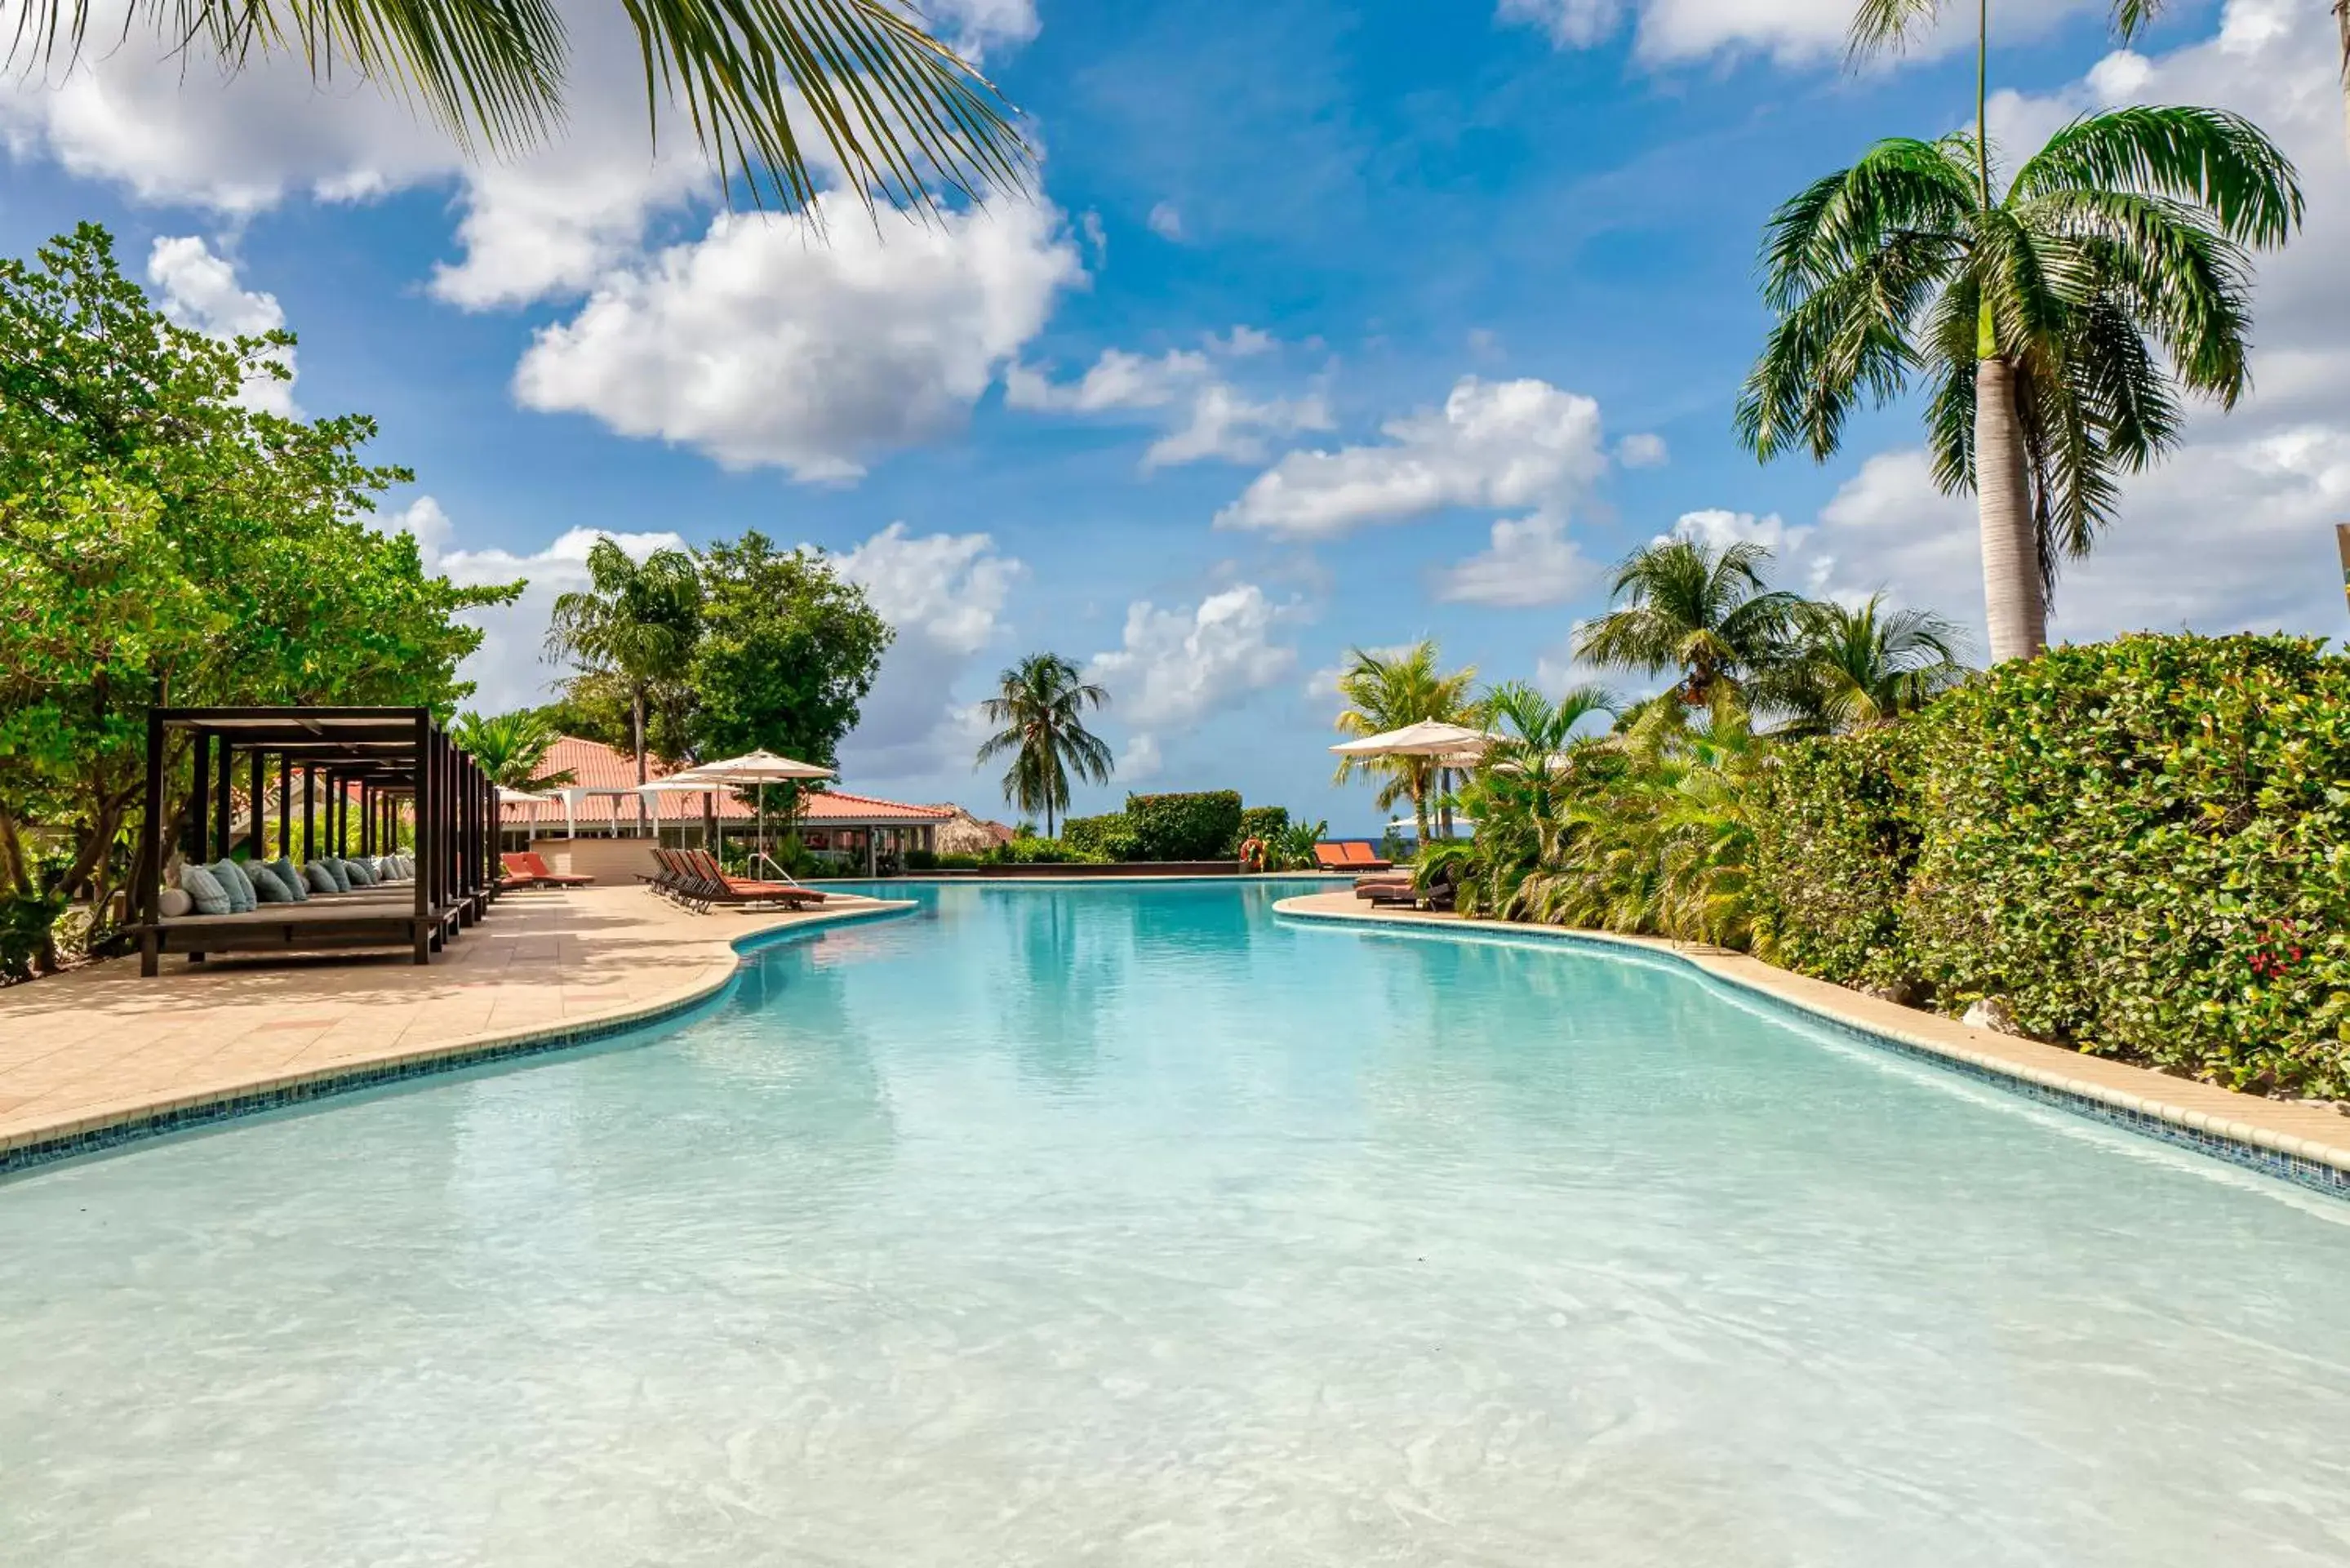 Swimming Pool in Dreams Curacao Resort, Spa & Casino